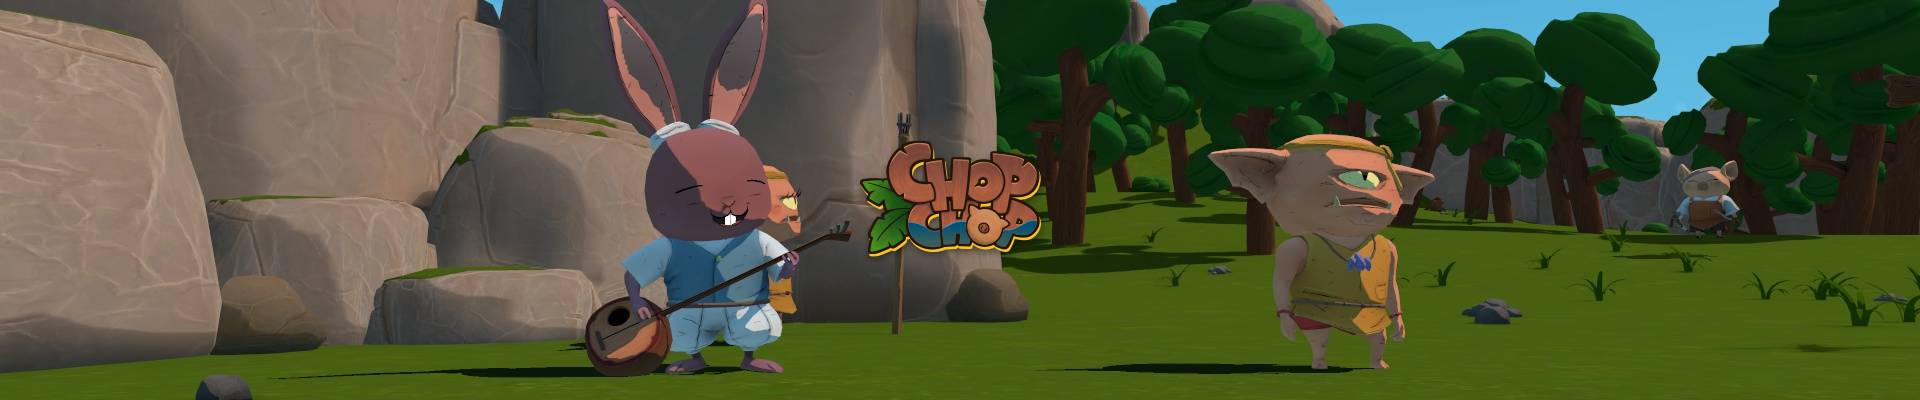 Chop Chop - Unity Open Project #1